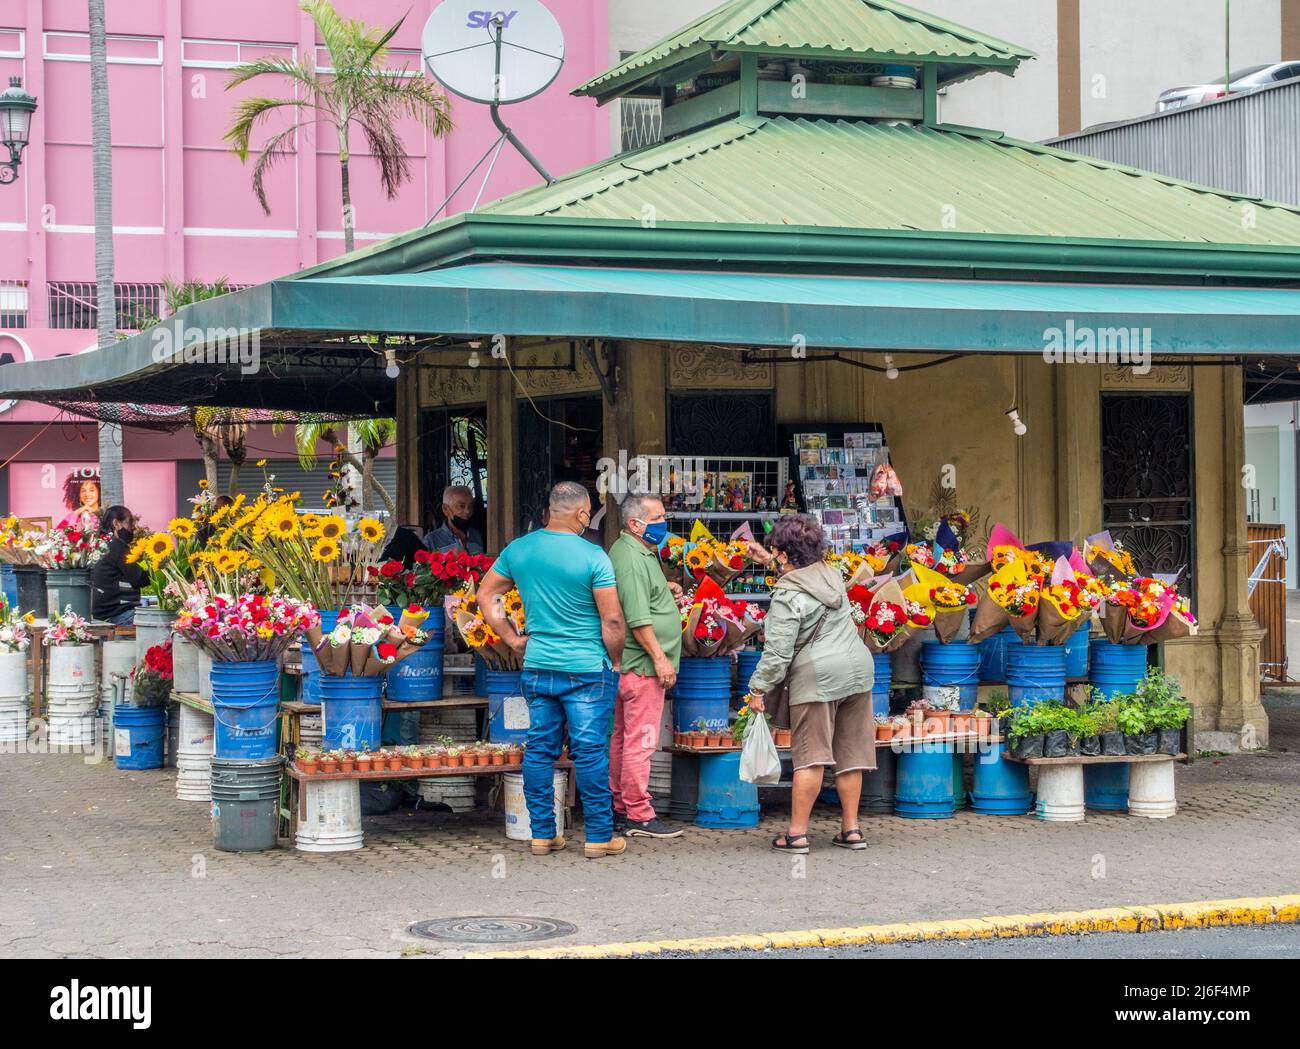 Multiplaza, Shopping Mall, San Jose, Costa Rica Stock Photo - Alamy